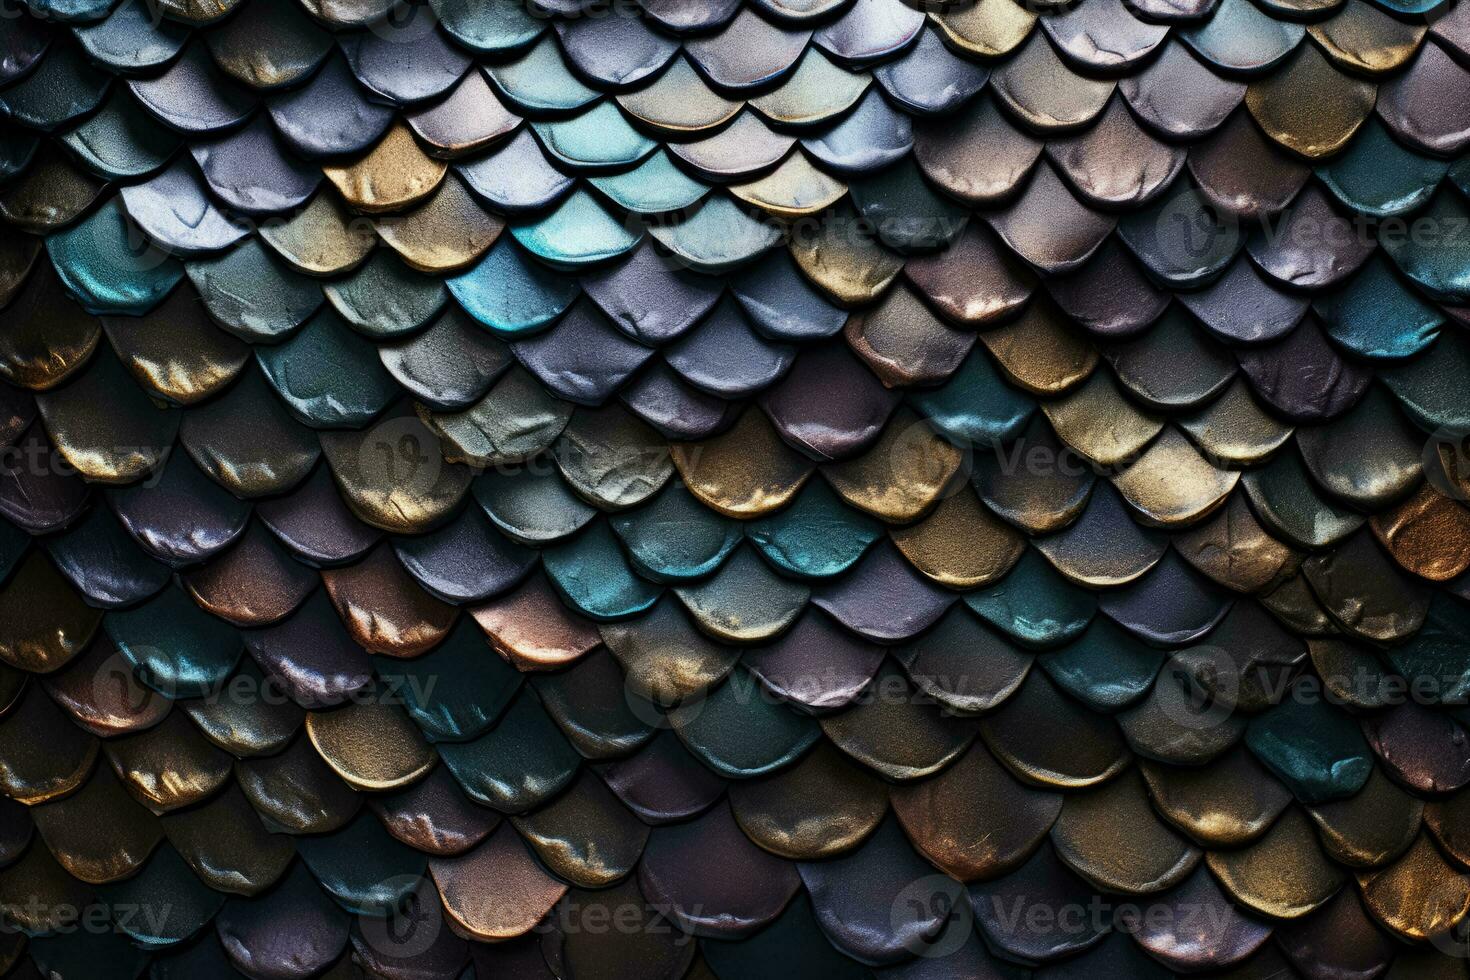 Black scales of snake reptile fish or mermaid create striking pattern photo